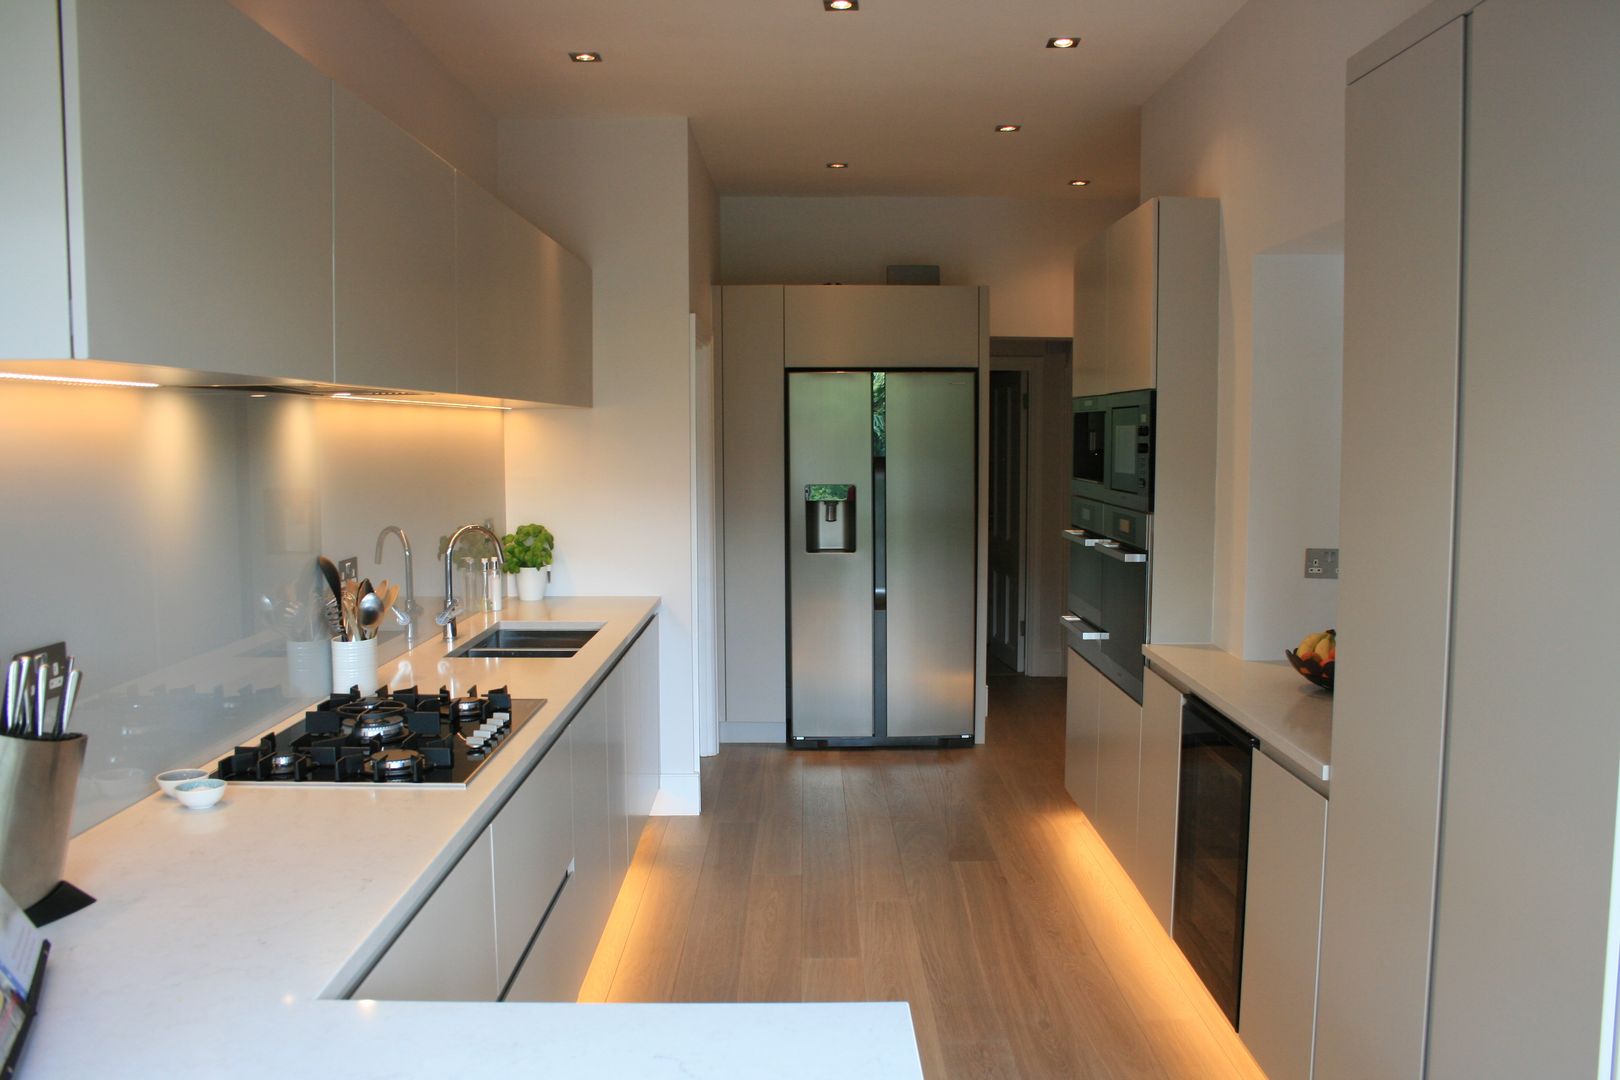 Barnes Kitchen , Place Design Kitchens and Interiors Place Design Kitchens and Interiors Кухня в стиле минимализм